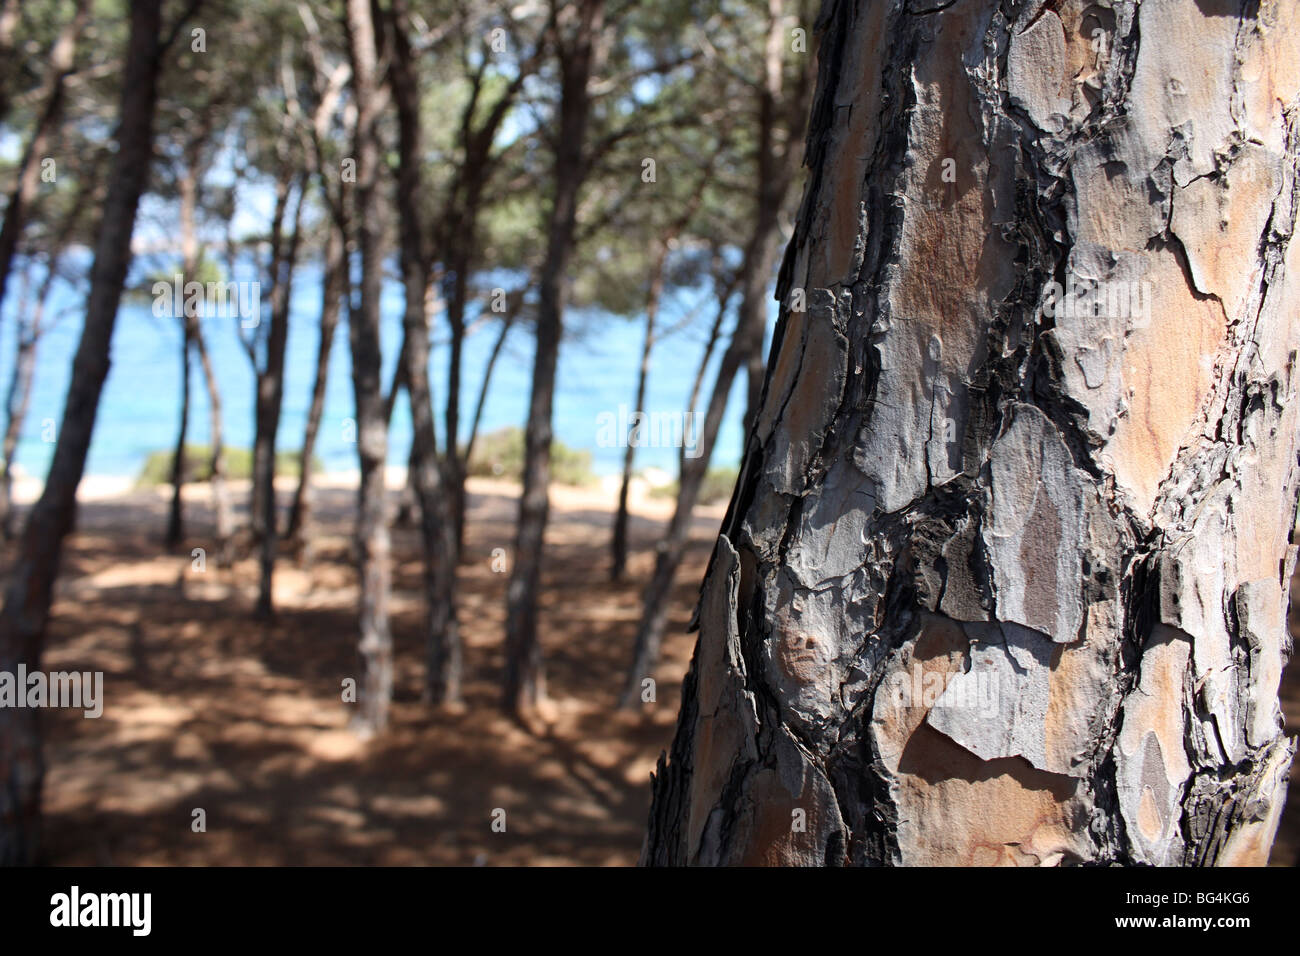 pine trees beach front Palau Sardinia Italy Stock Photo